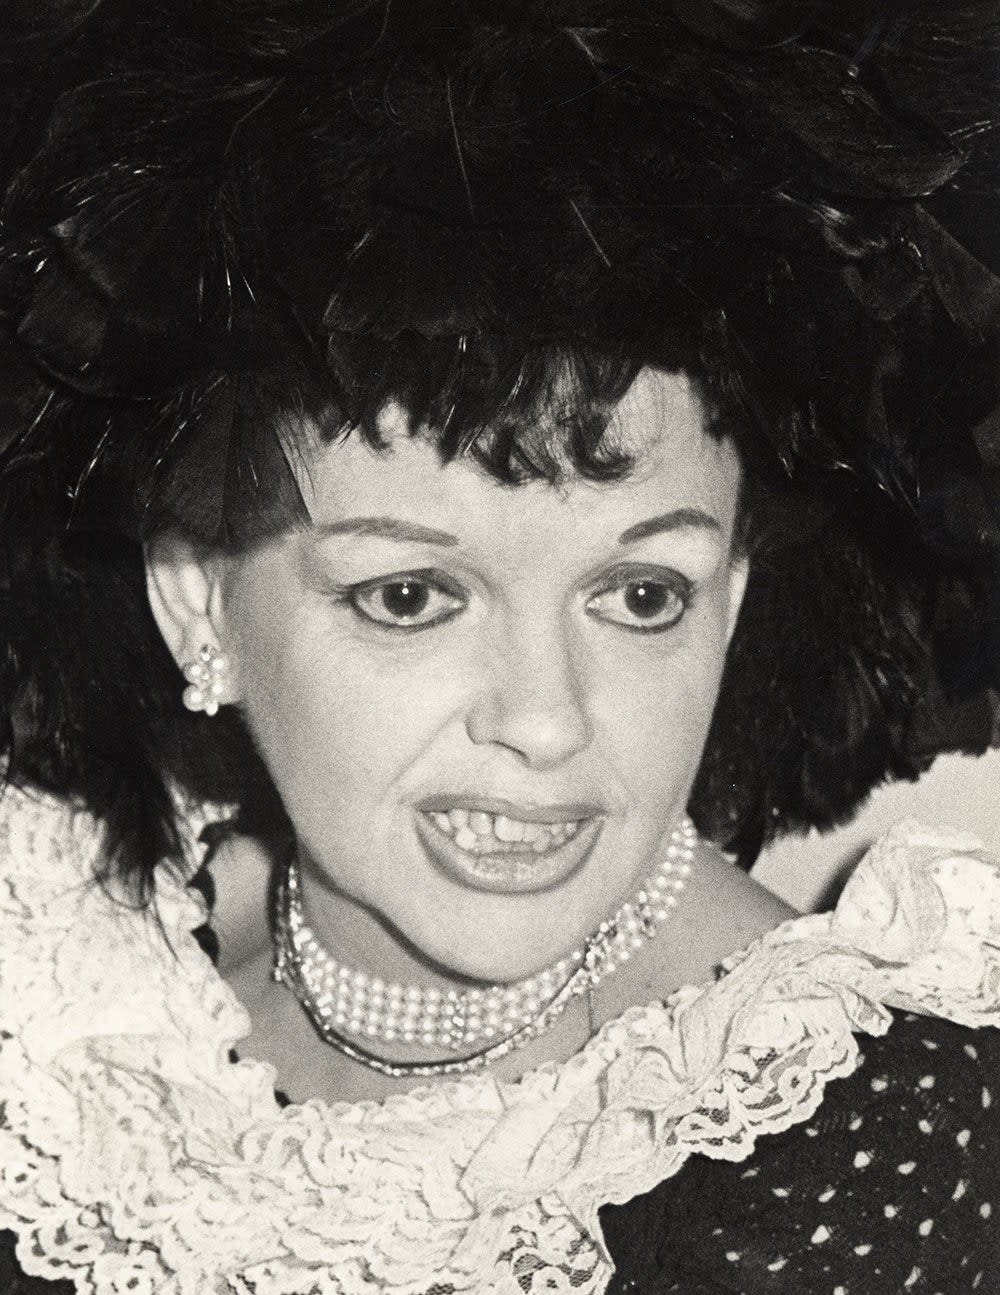 A close-up of Judy Garland wearing a ruffled dress